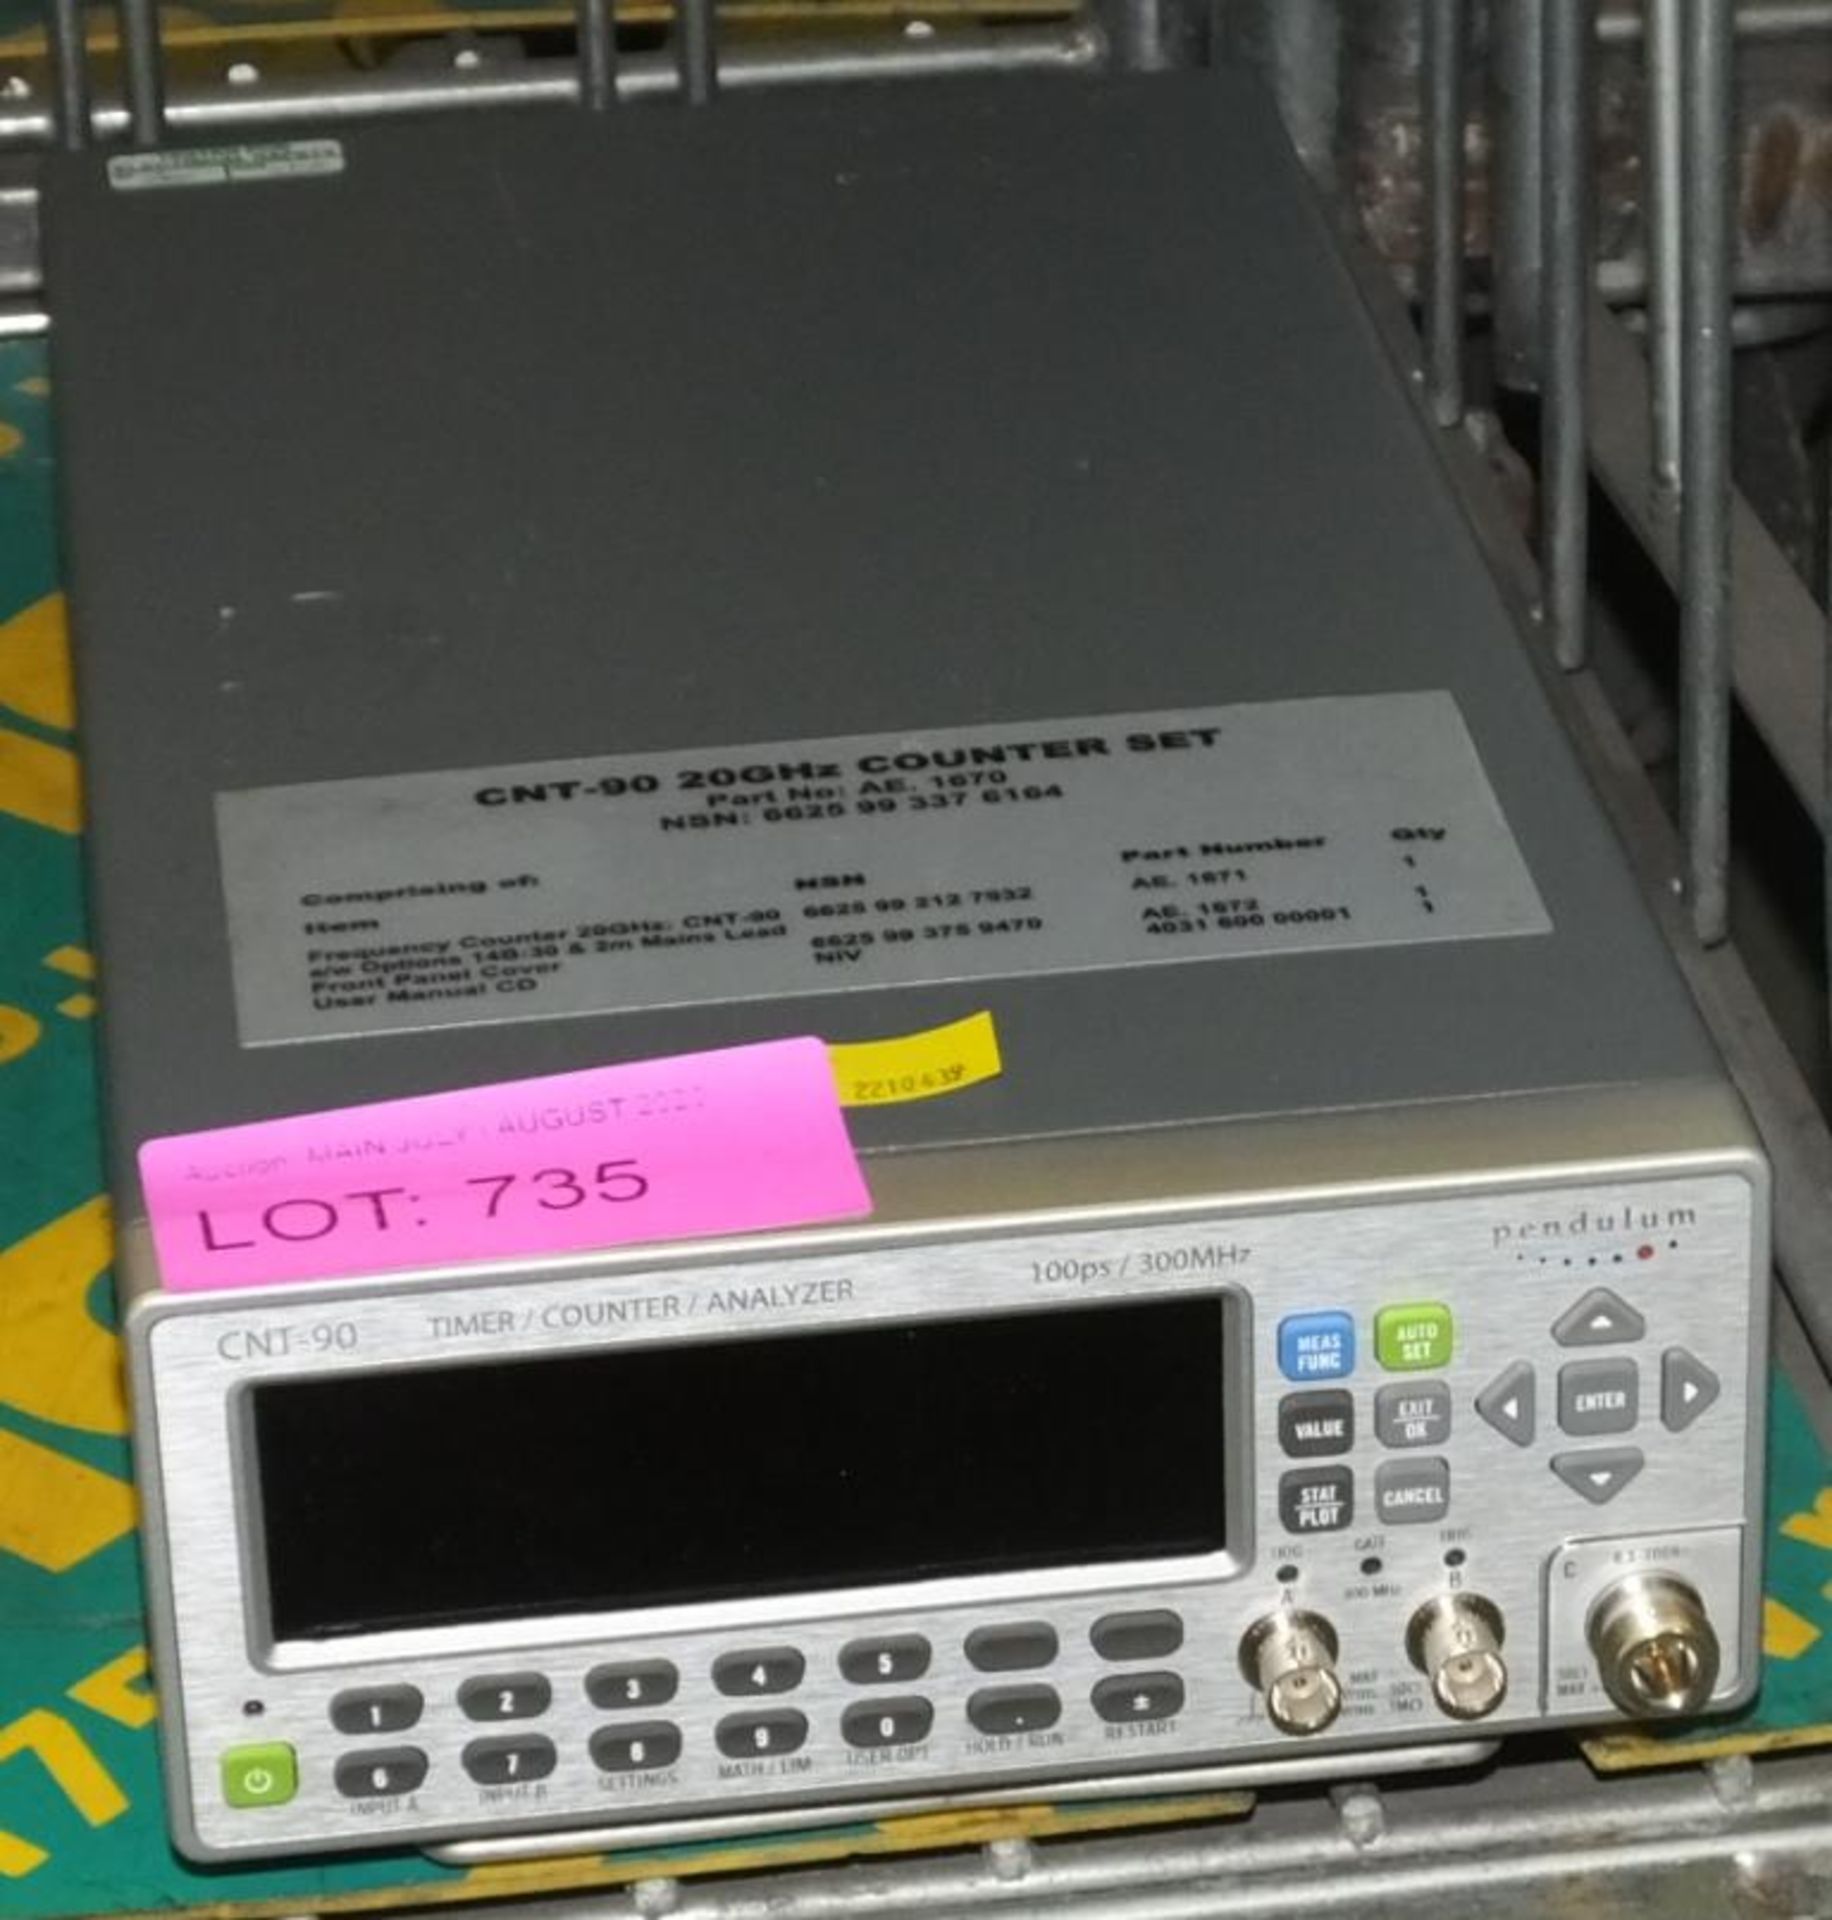 Pendulum CNT-90 Timer / Counter / Analyzer - 100ps / 300MHz